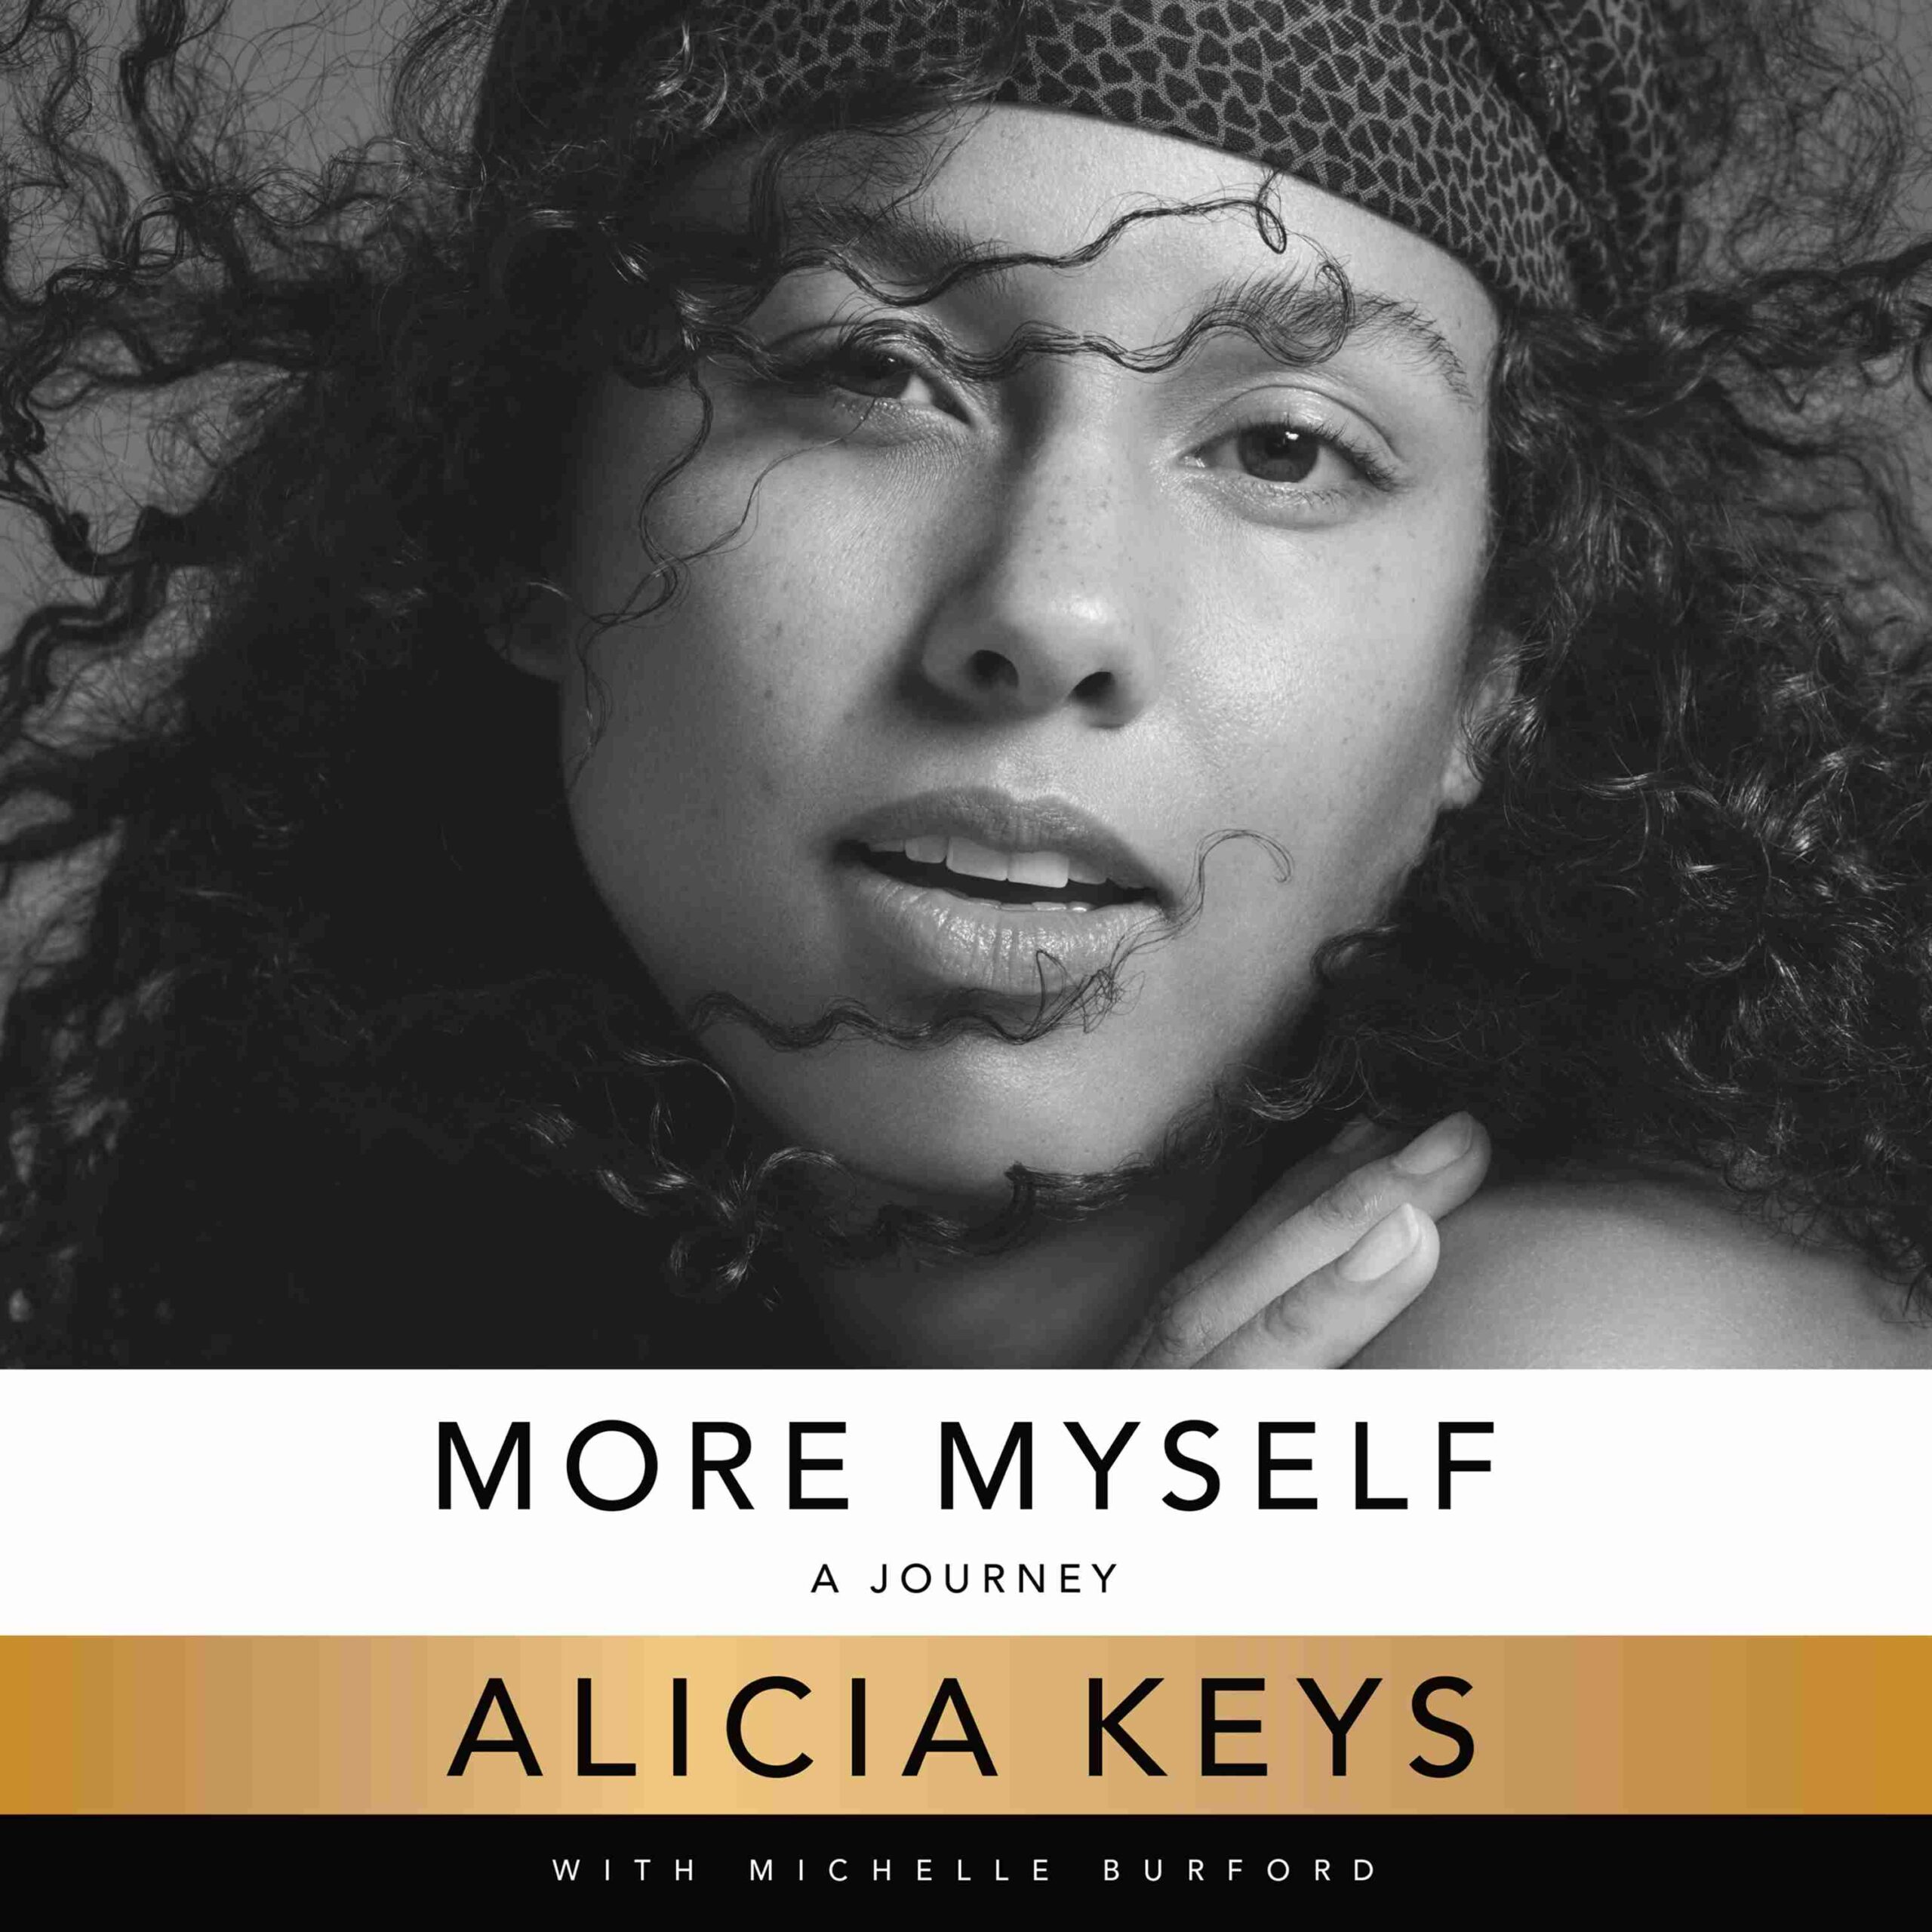 More Myself byAlicia Keys Audiobook. 26.99 USD